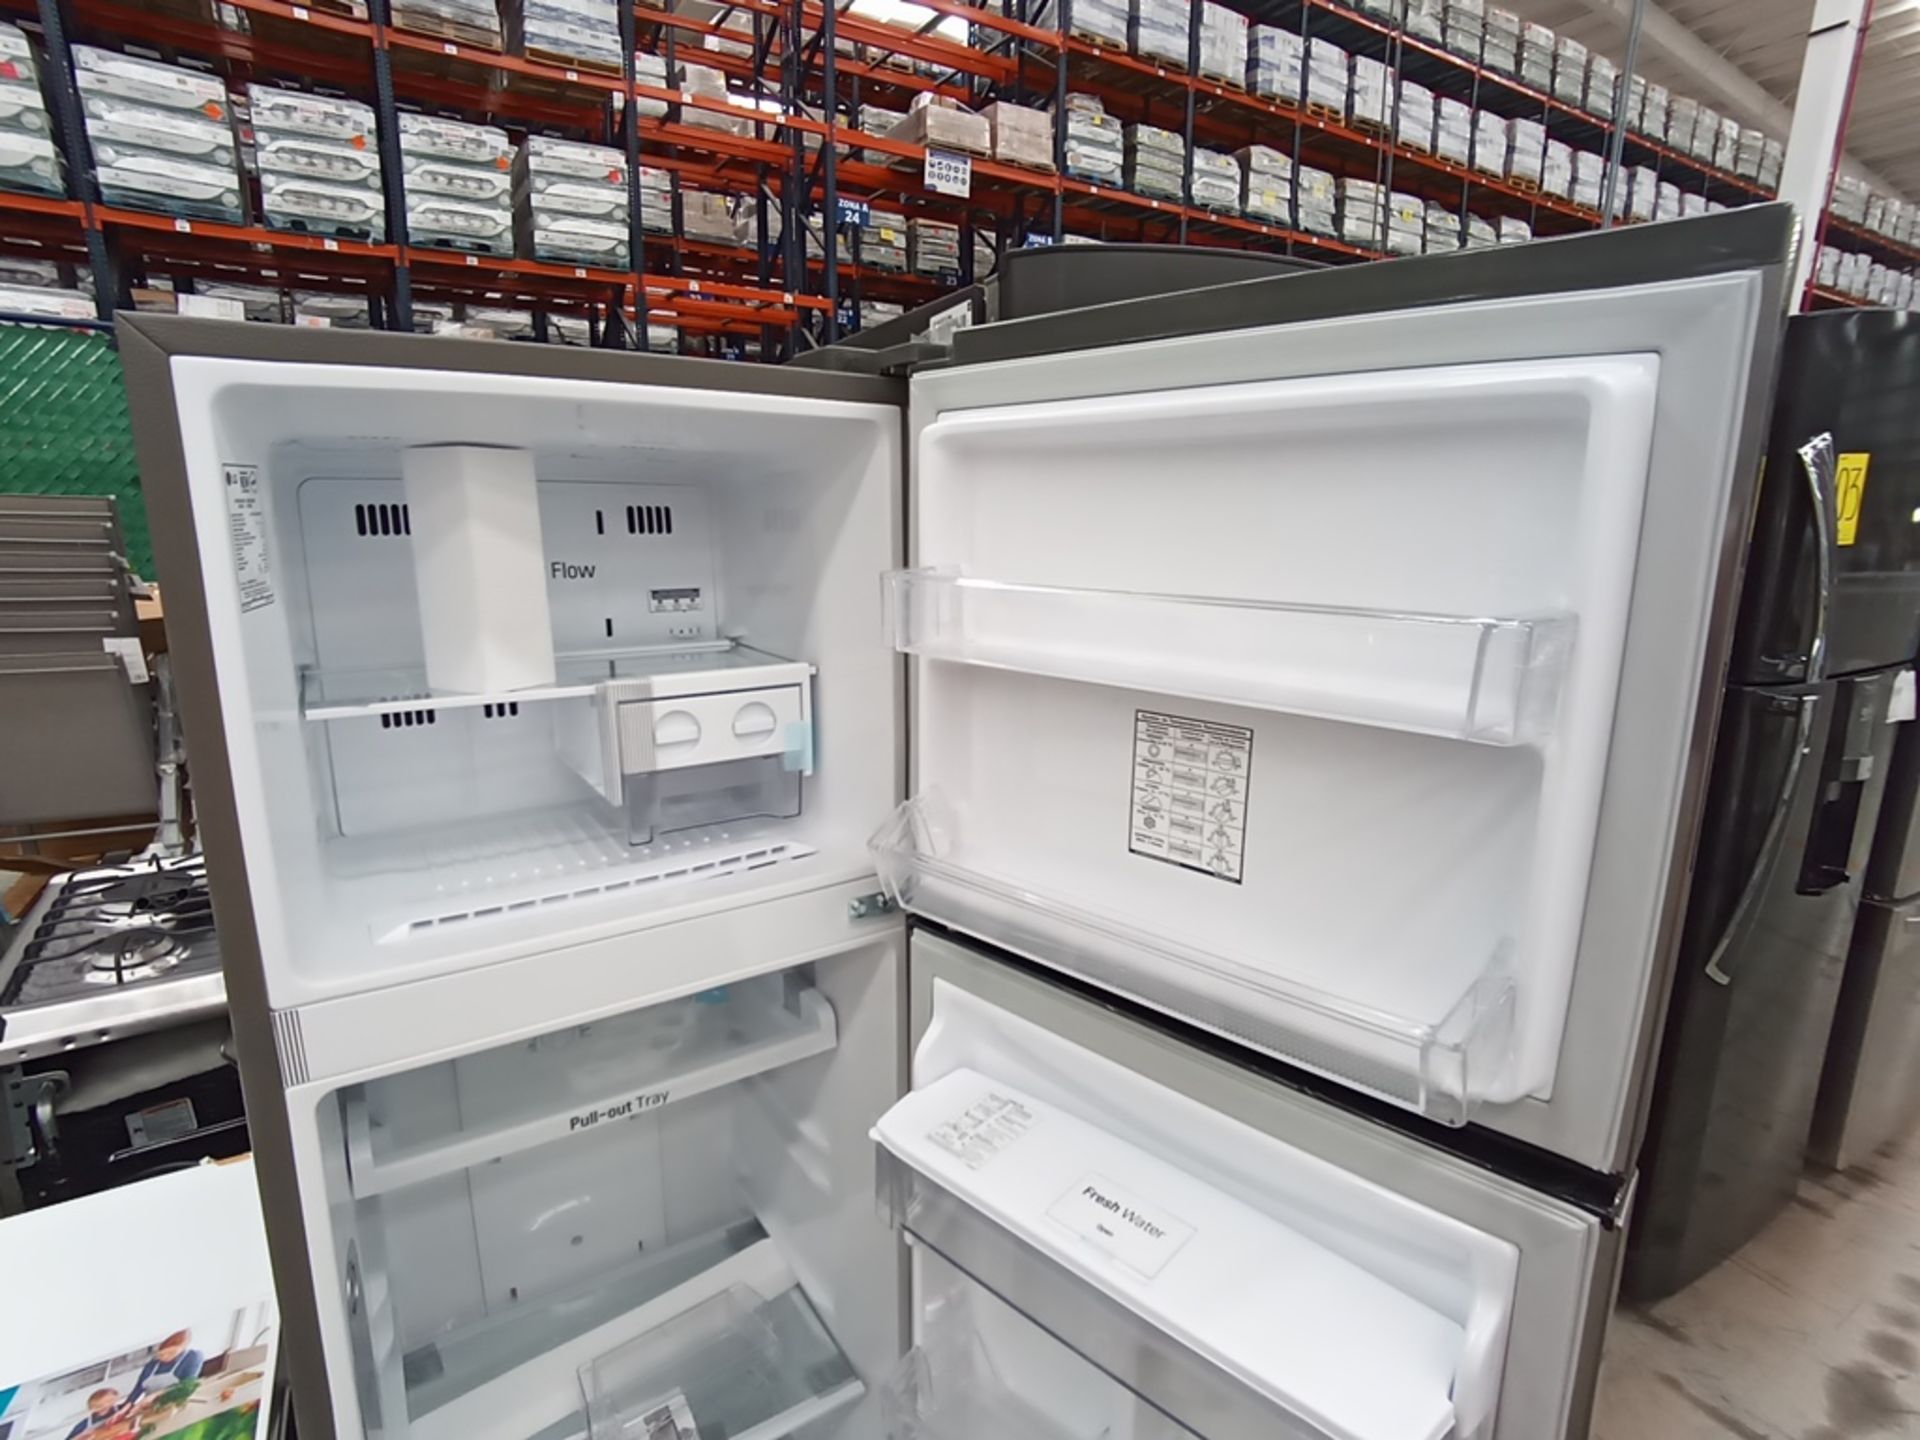 1 Refrigerador con dispensador de agua, Marca LG, Modelo GT29WDC, Serie 104MRUY2D310, Color Gris, G - Image 8 of 10